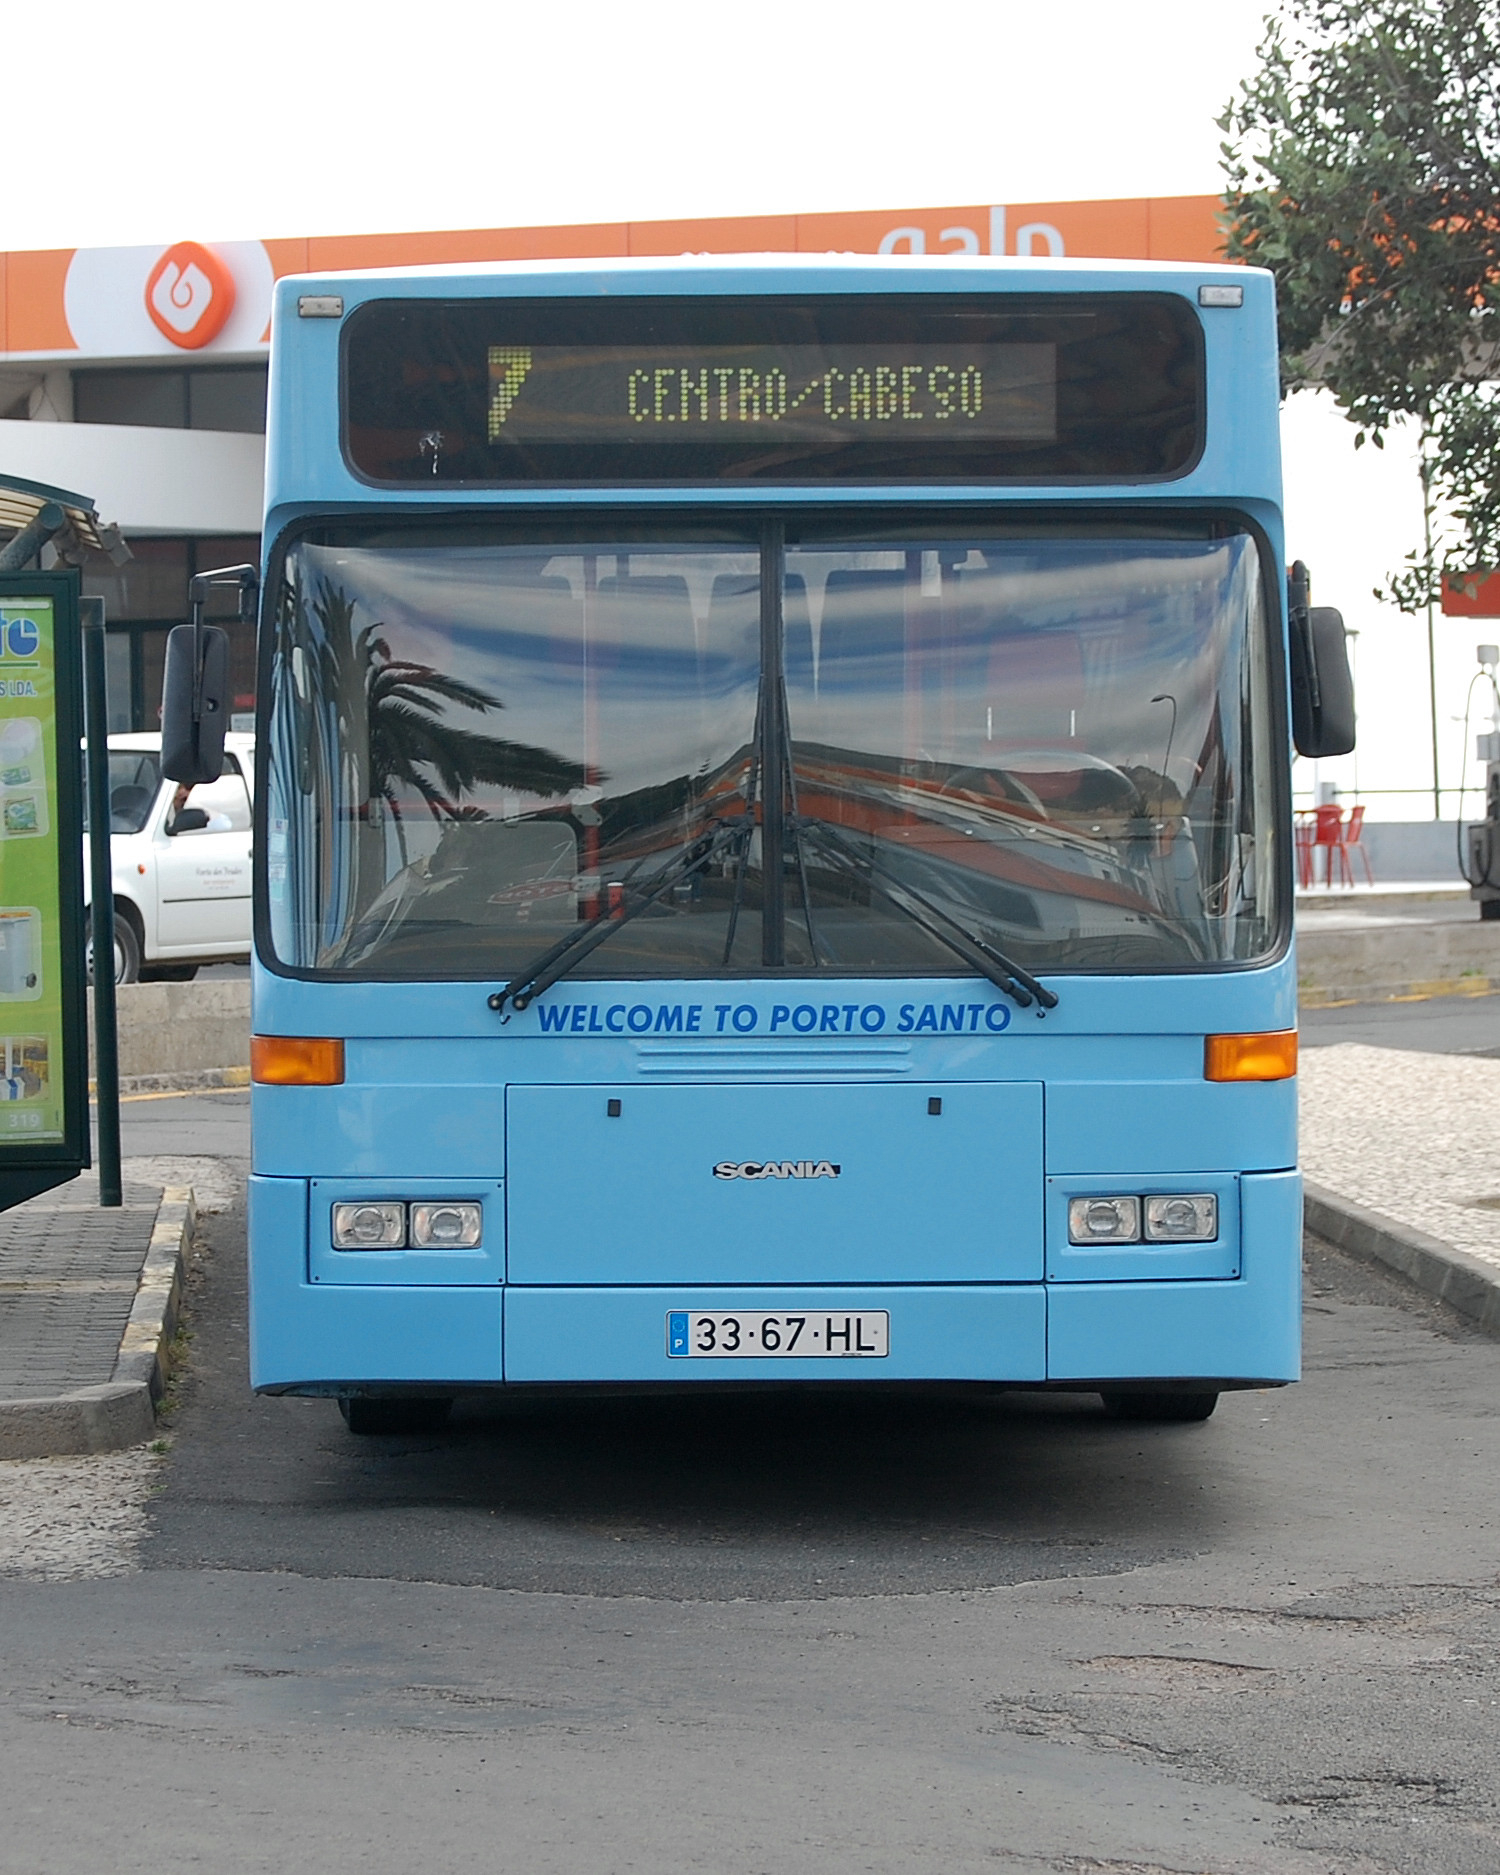 Foto: "Bus to the Town Center in Porto Santo island" von Luke H. Gordon, via Flickr, CC BY 2.0